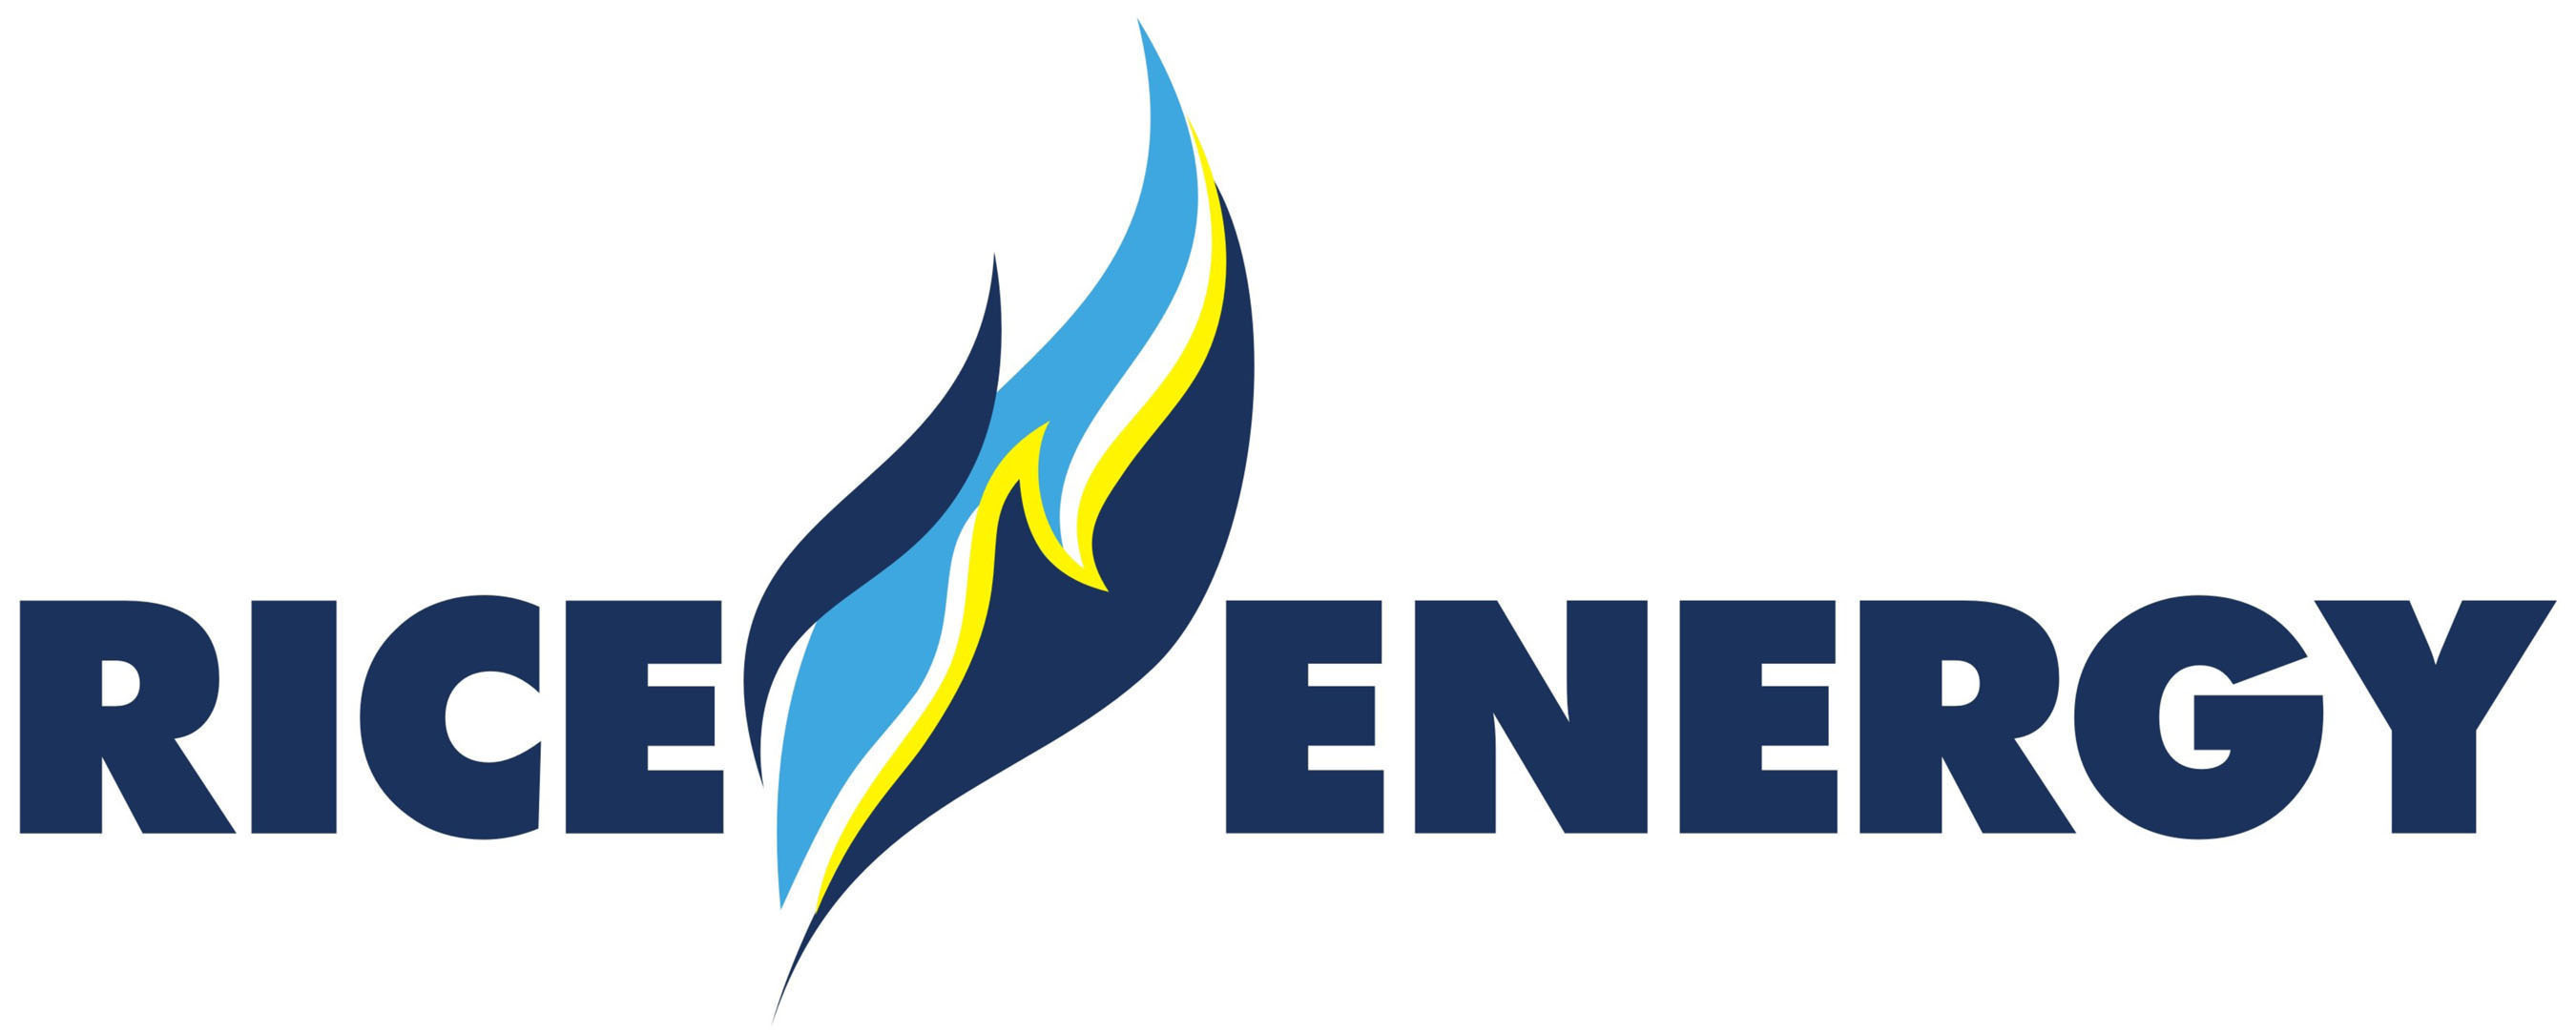 Rice Energy Logo. (PRNewsFoto/Rice Energy Inc.) (PRNewsFoto/RICE ENERGY INC.)